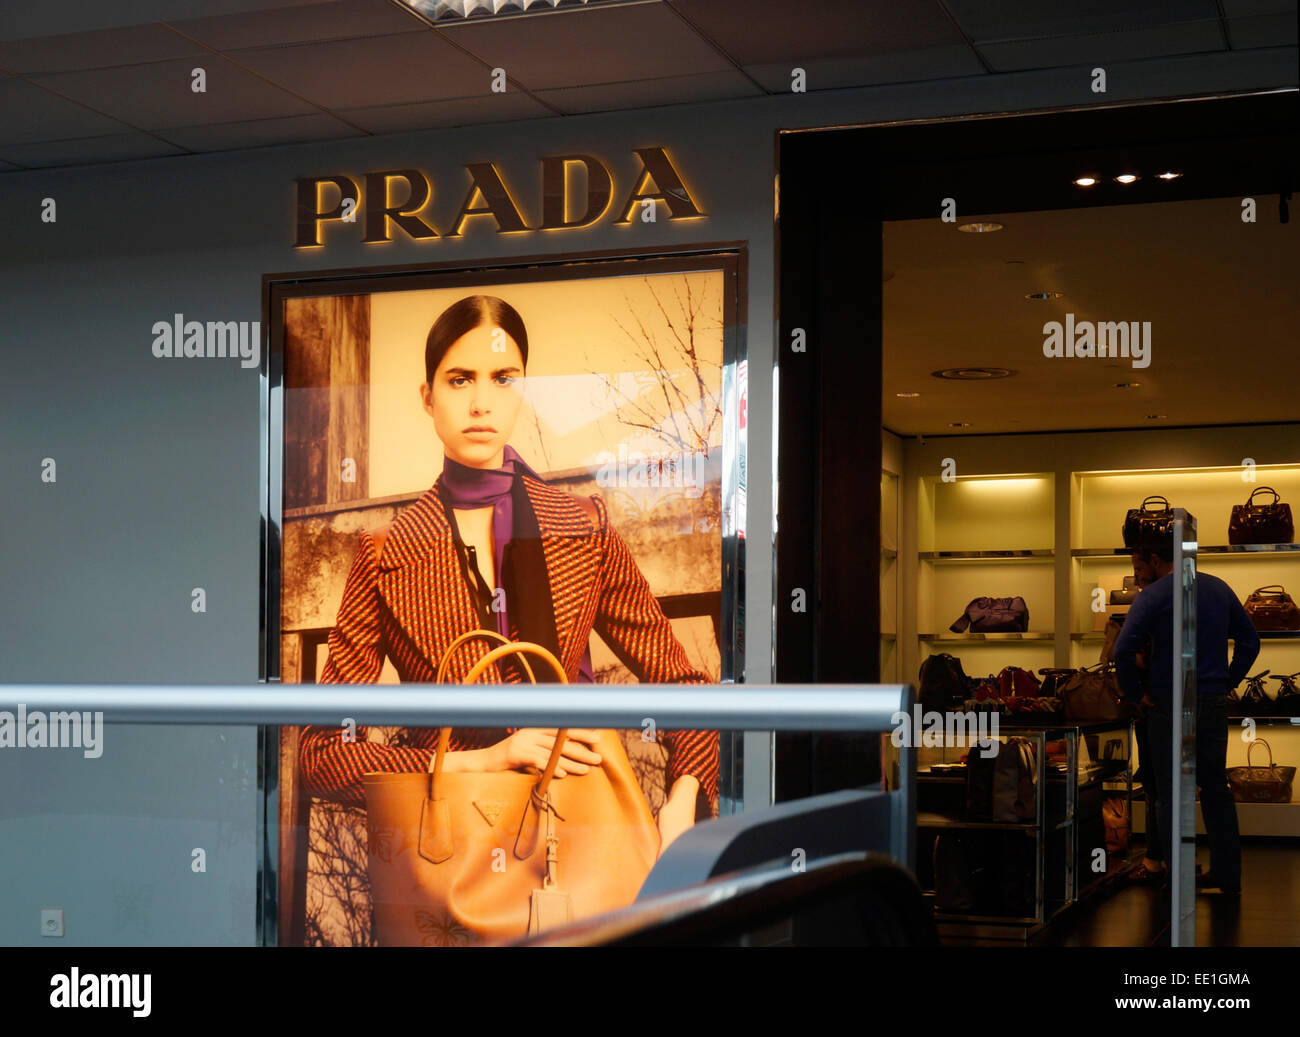 Prada-Geschäft im Foxtown Outlet Shopping Mall, Mendrisio, Tessin, Schweiz  Stockfotografie - Alamy